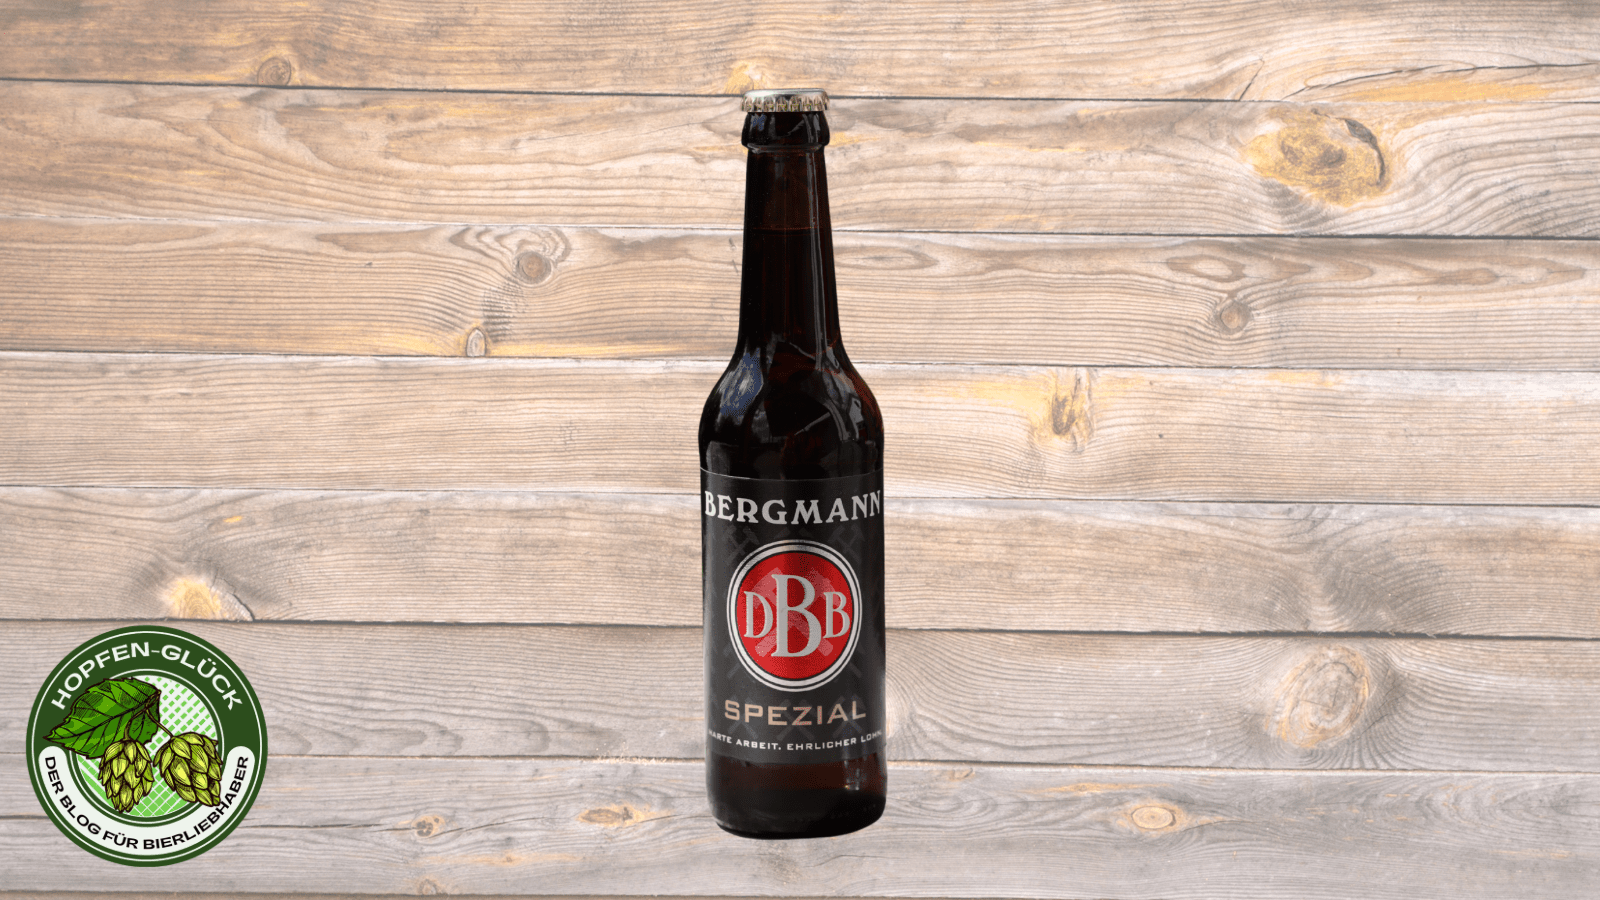 Dortmunder Bergmann Brauerei – Dbb Spezial